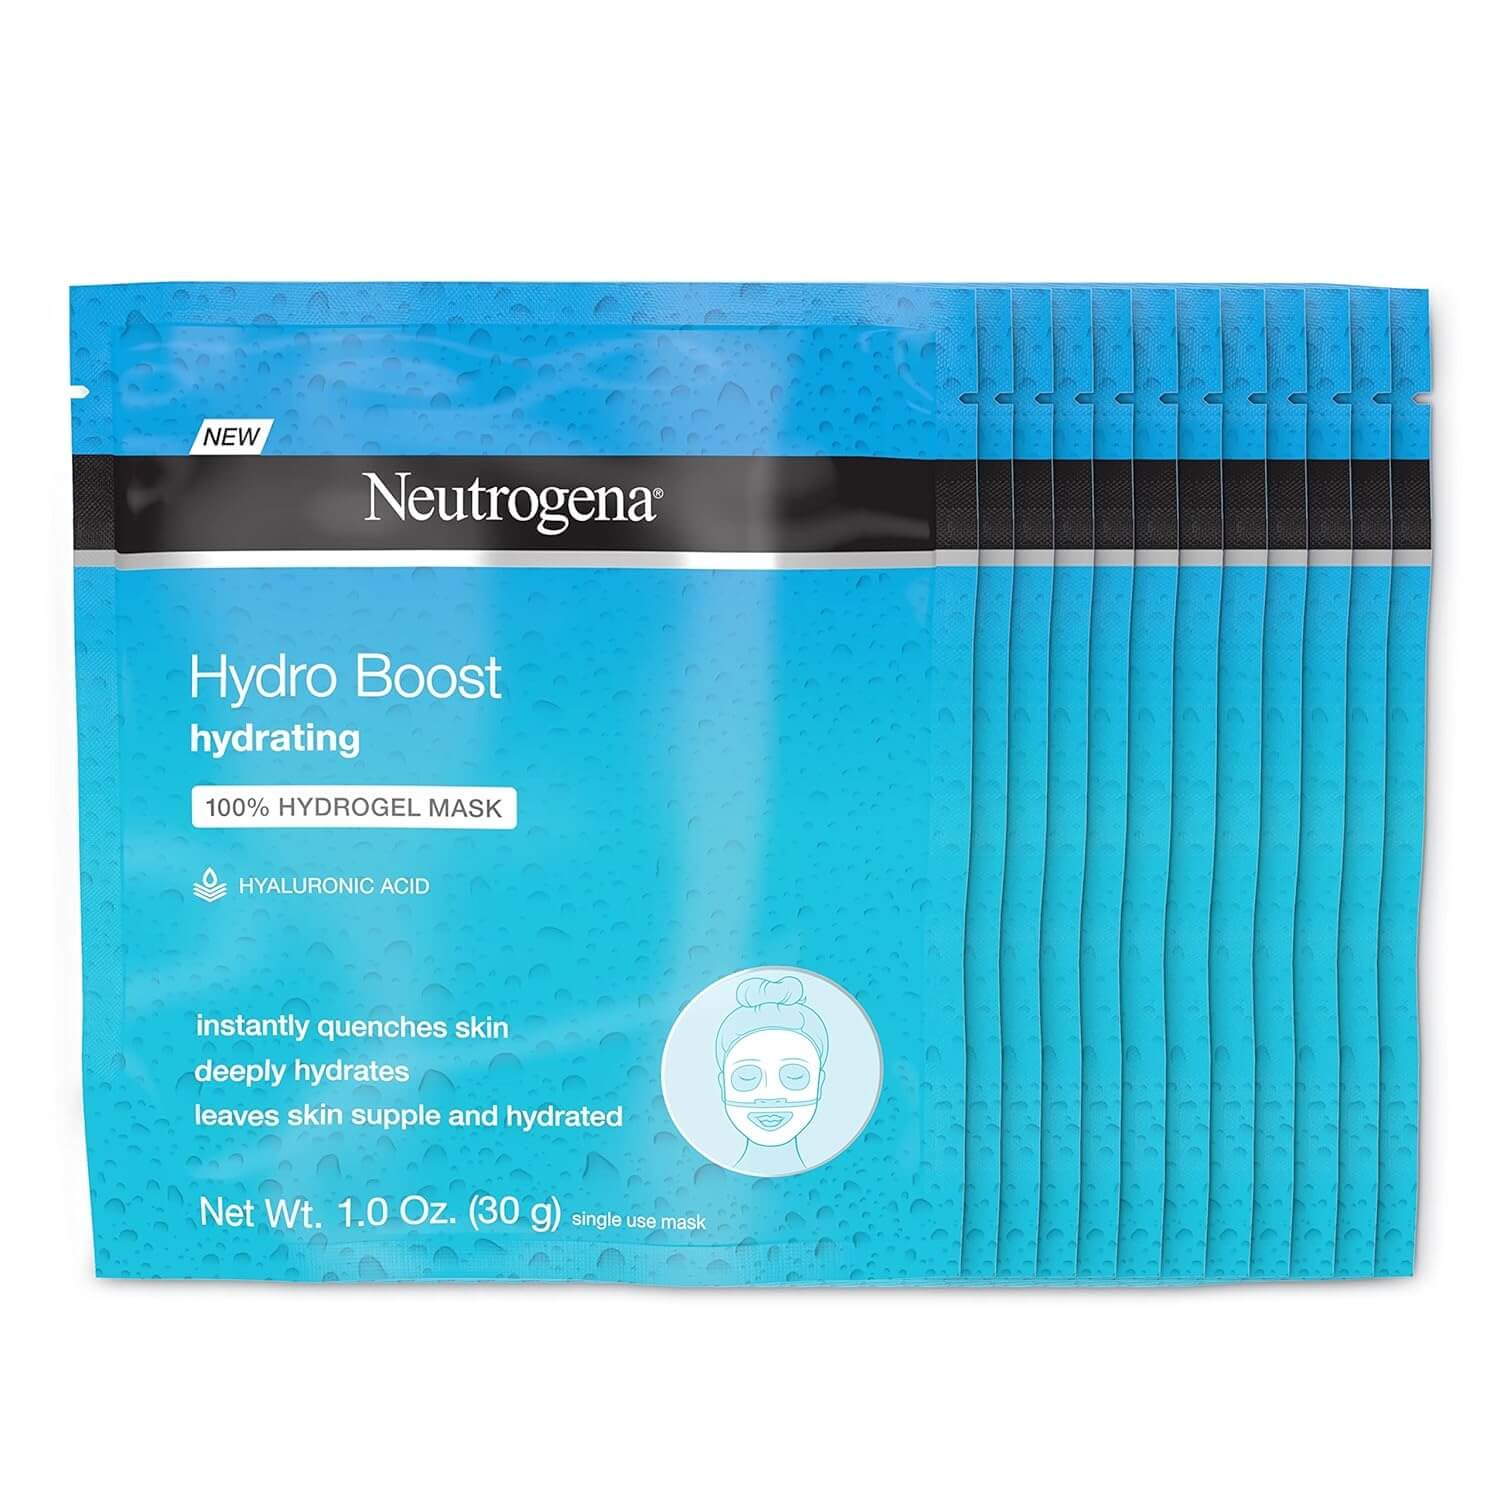 Neutrogena hydro boost sheet mask